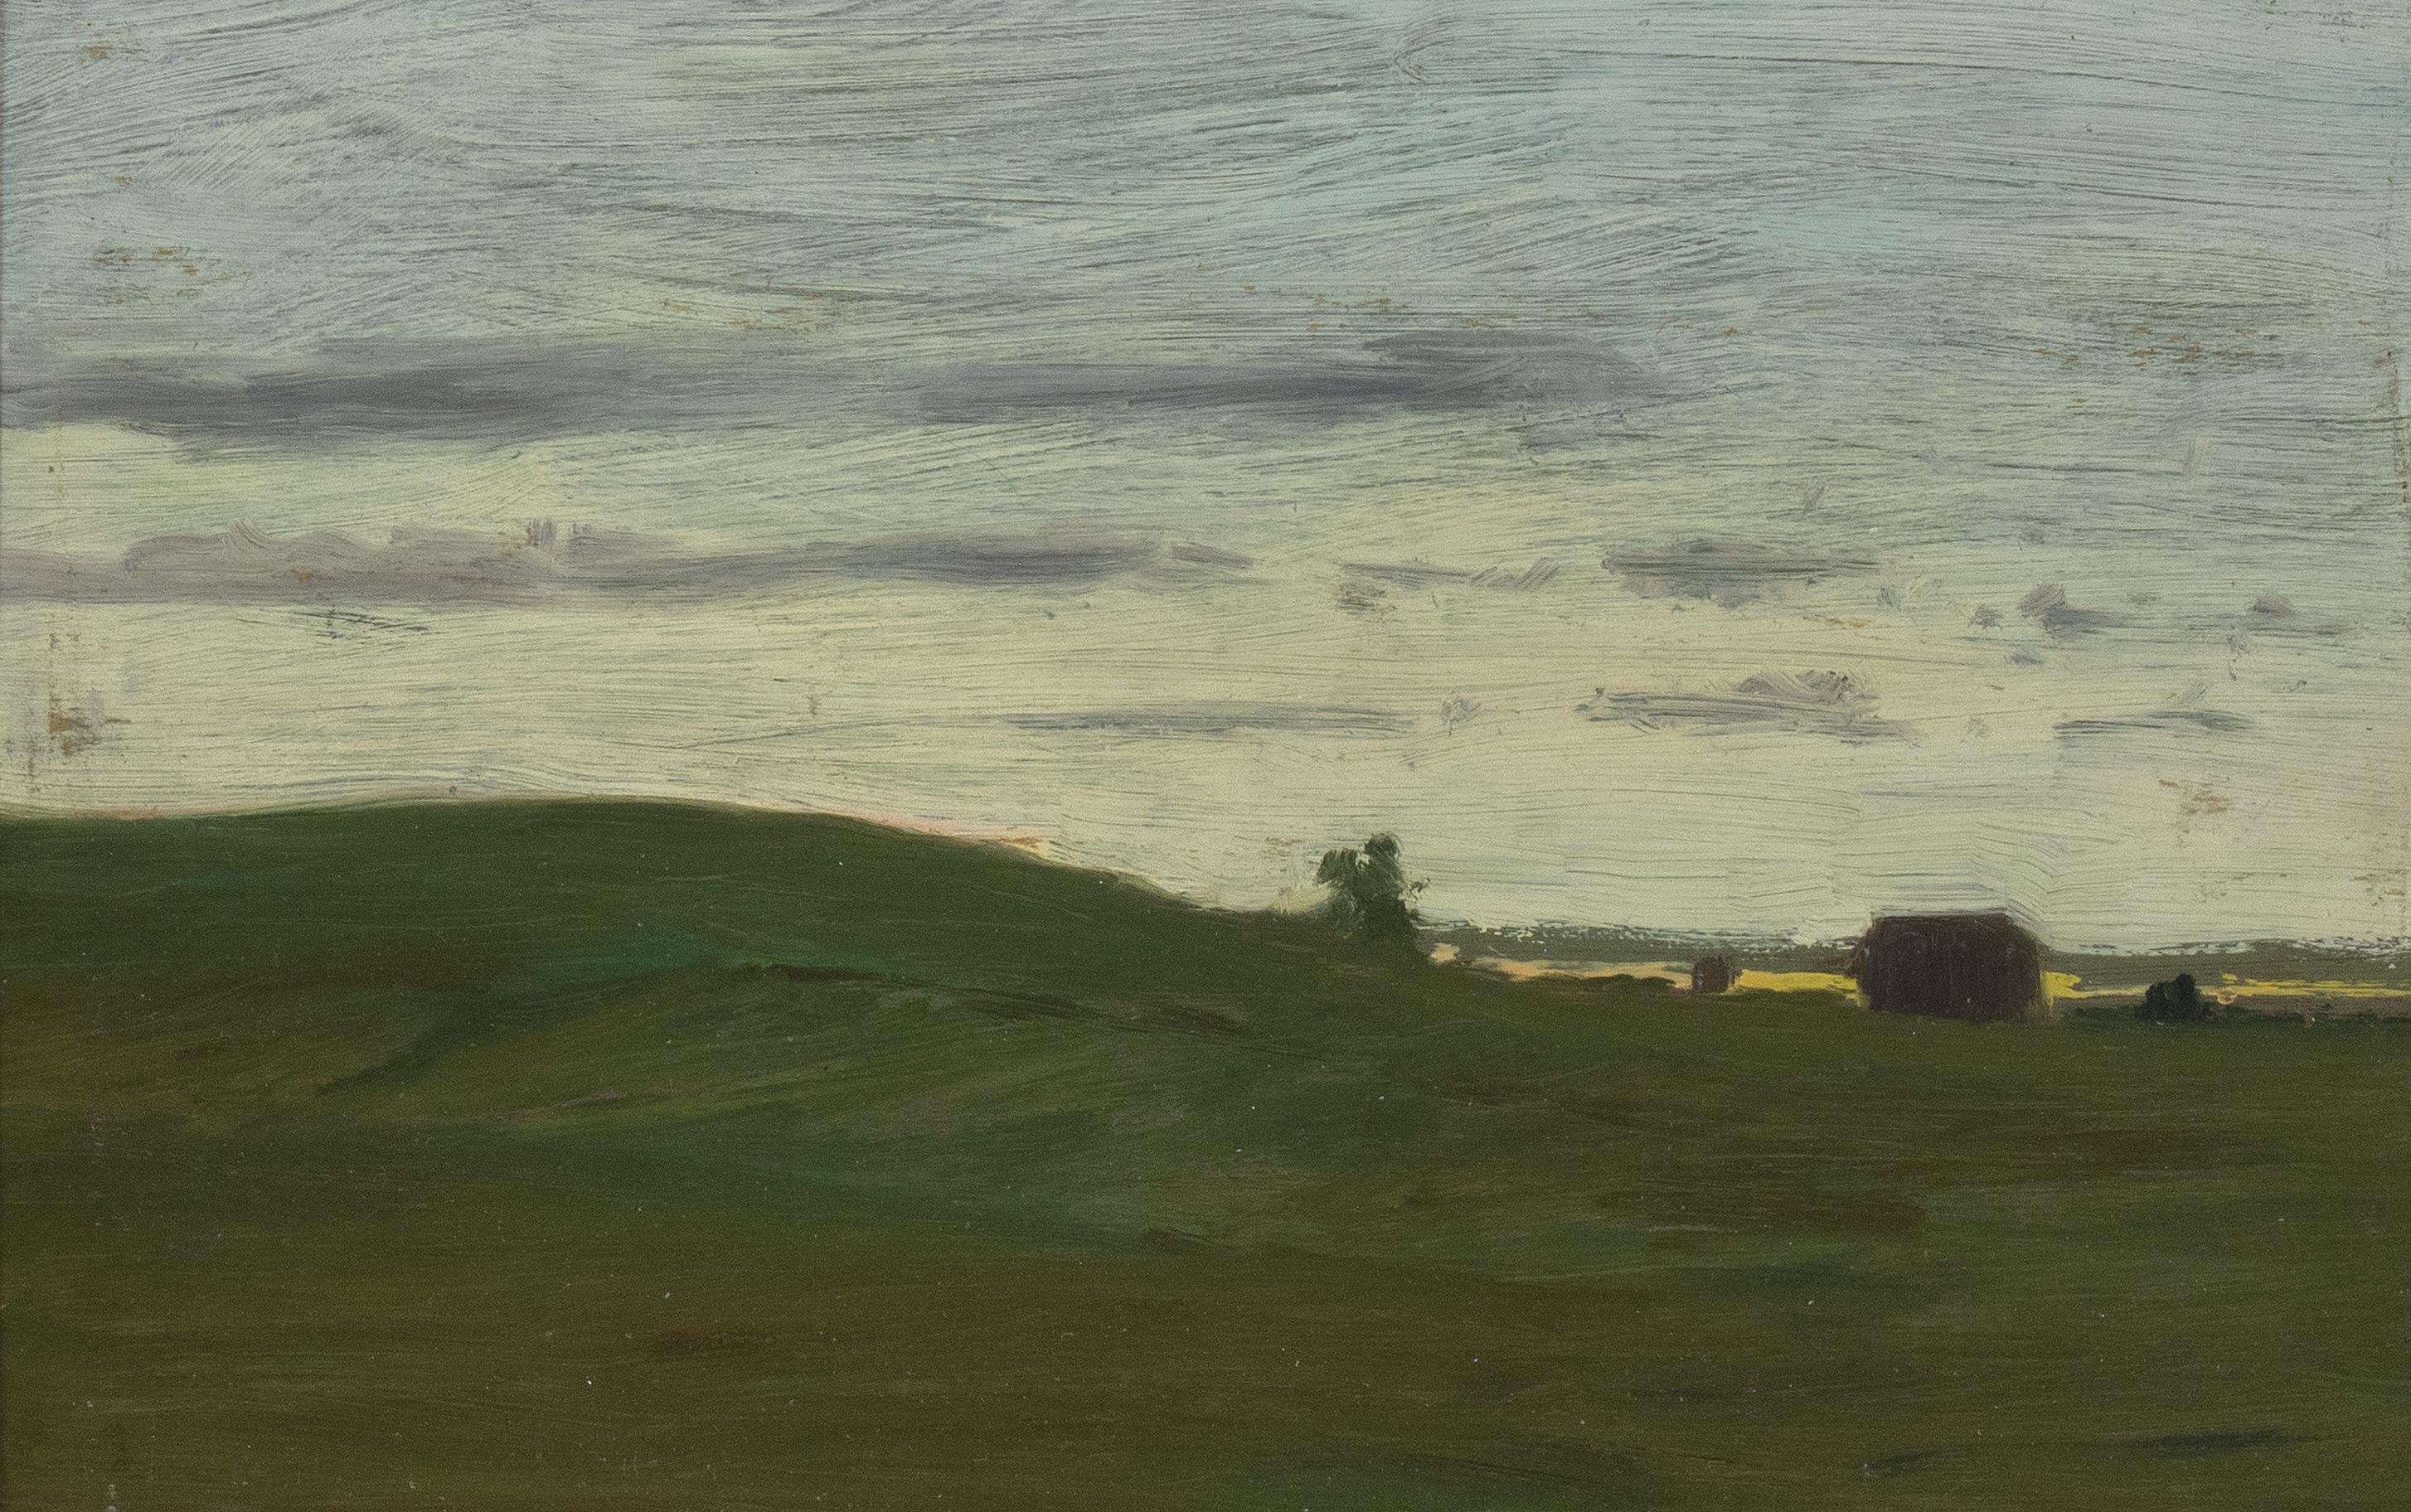 Green Field and Barn - A Tonalist Landscape by Robertson Mygatt - Painting by Robertson K. Mygatt